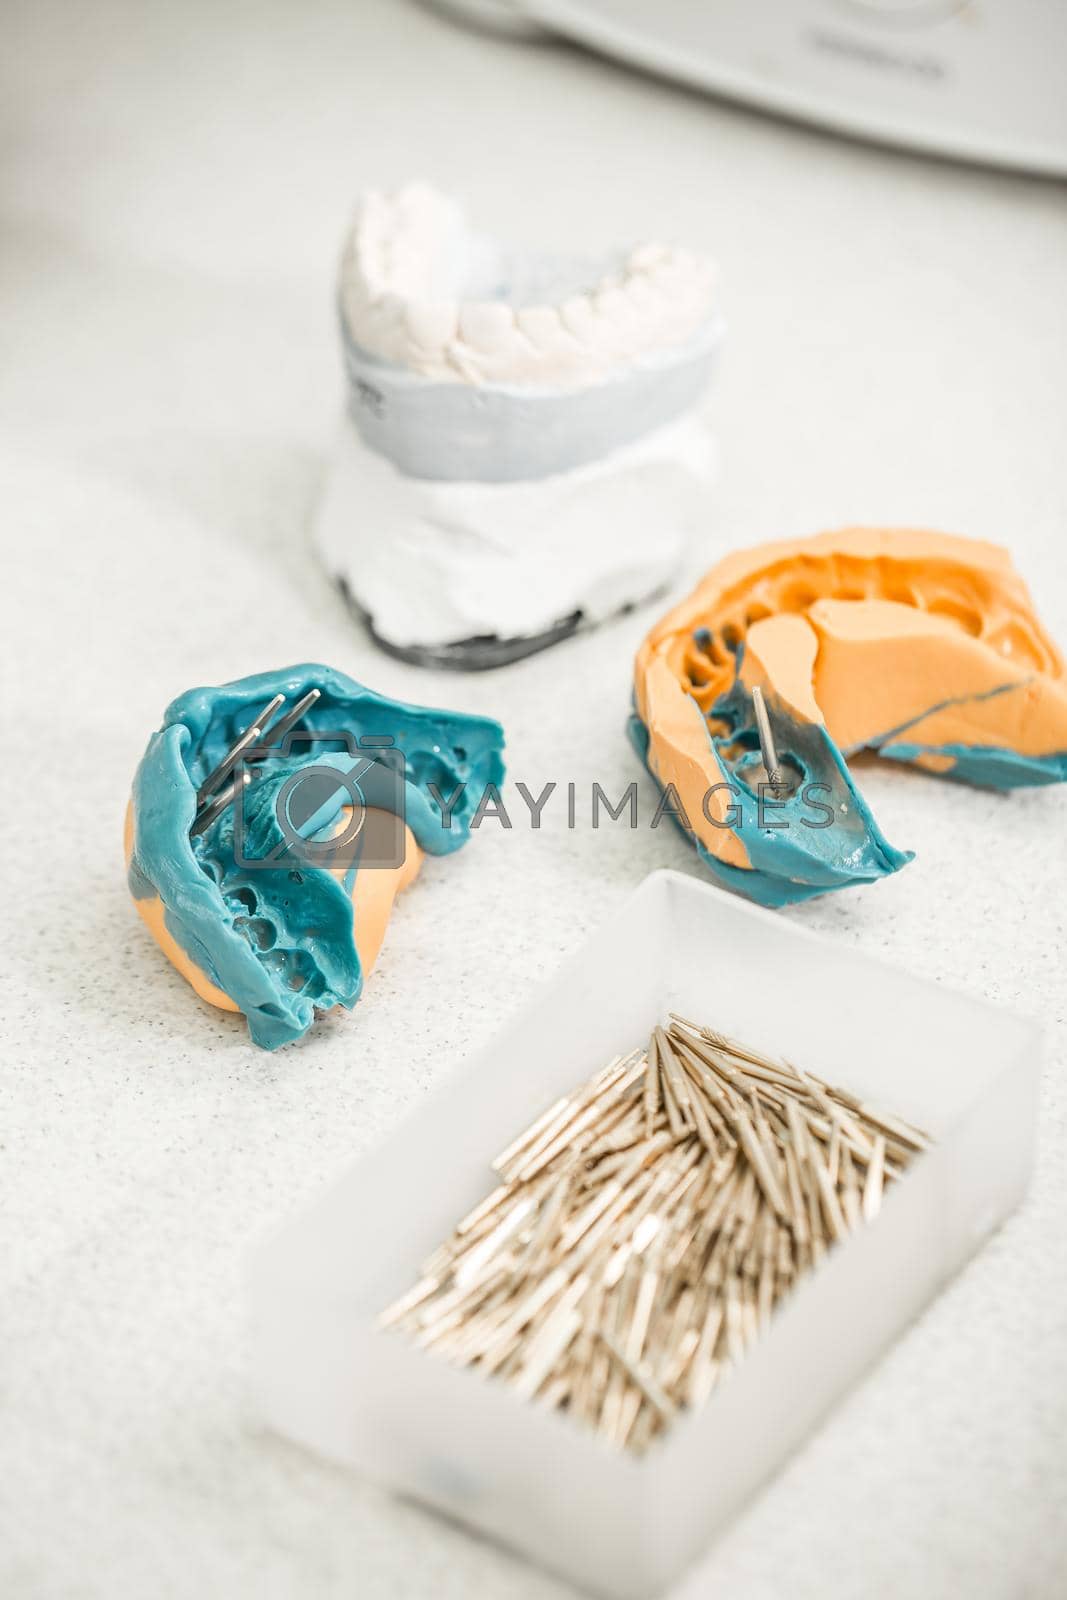 Dental impression and tooth model, denture concept